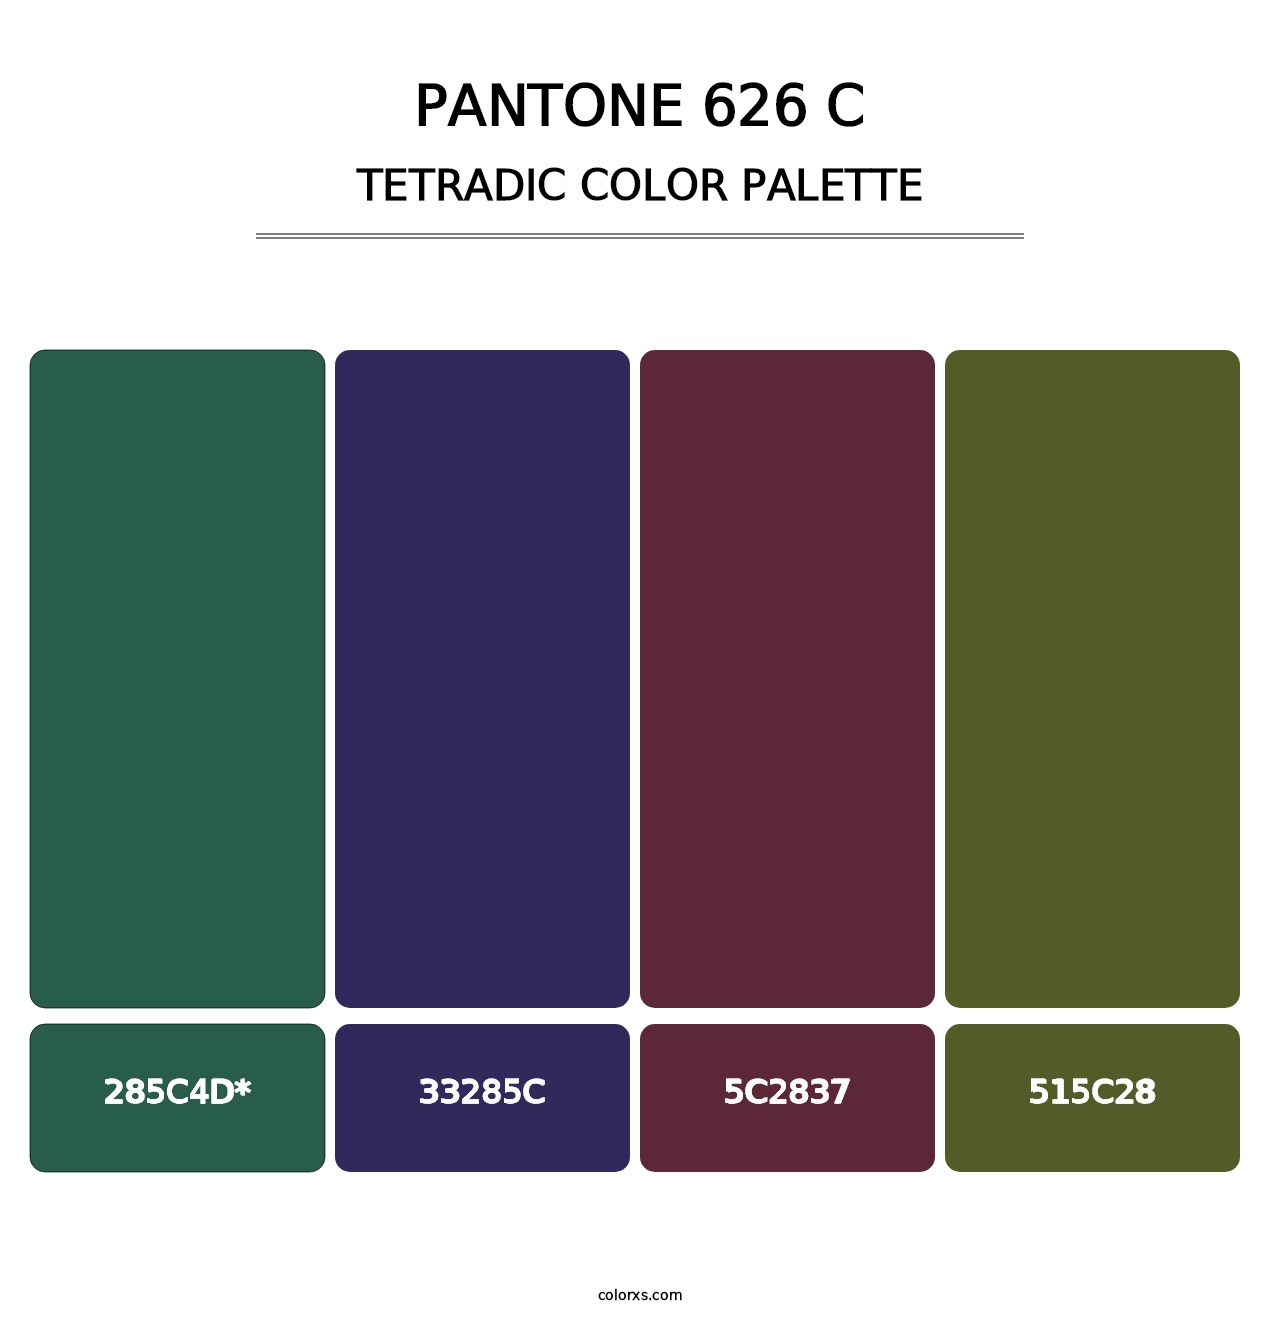 PANTONE 626 C - Tetradic Color Palette